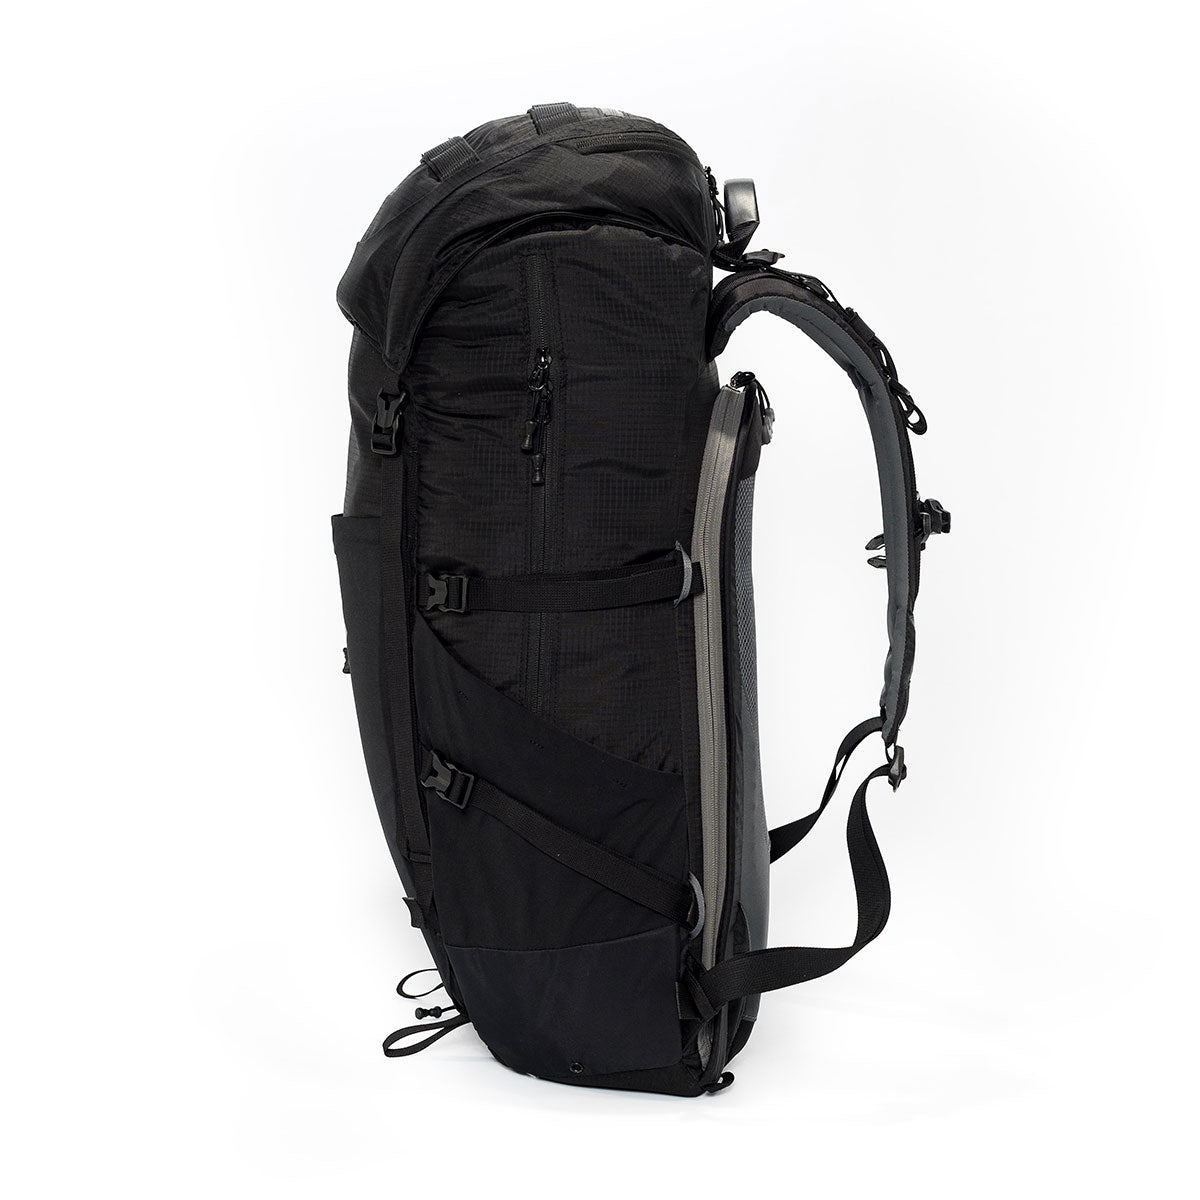 Atlas Athlete Medium Backpack (Black)